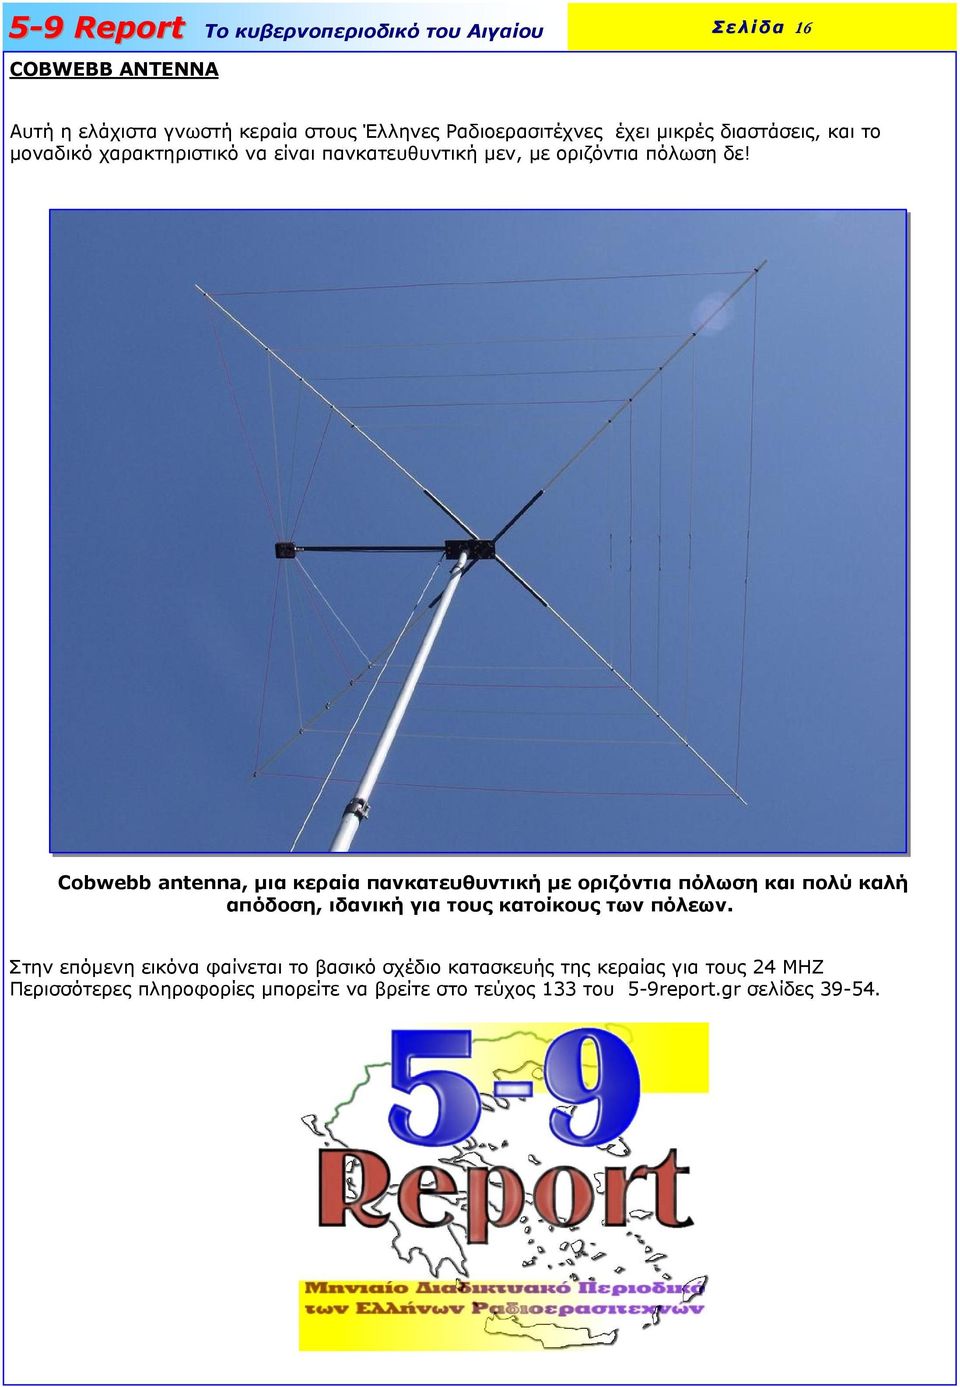 Cobwebb antenna, µια κεραία πανκατευθυντική µε οριζόντια πόλωση και πολύ καλή απόδοση, ιδανική για τους κατοίκους των πόλεων.